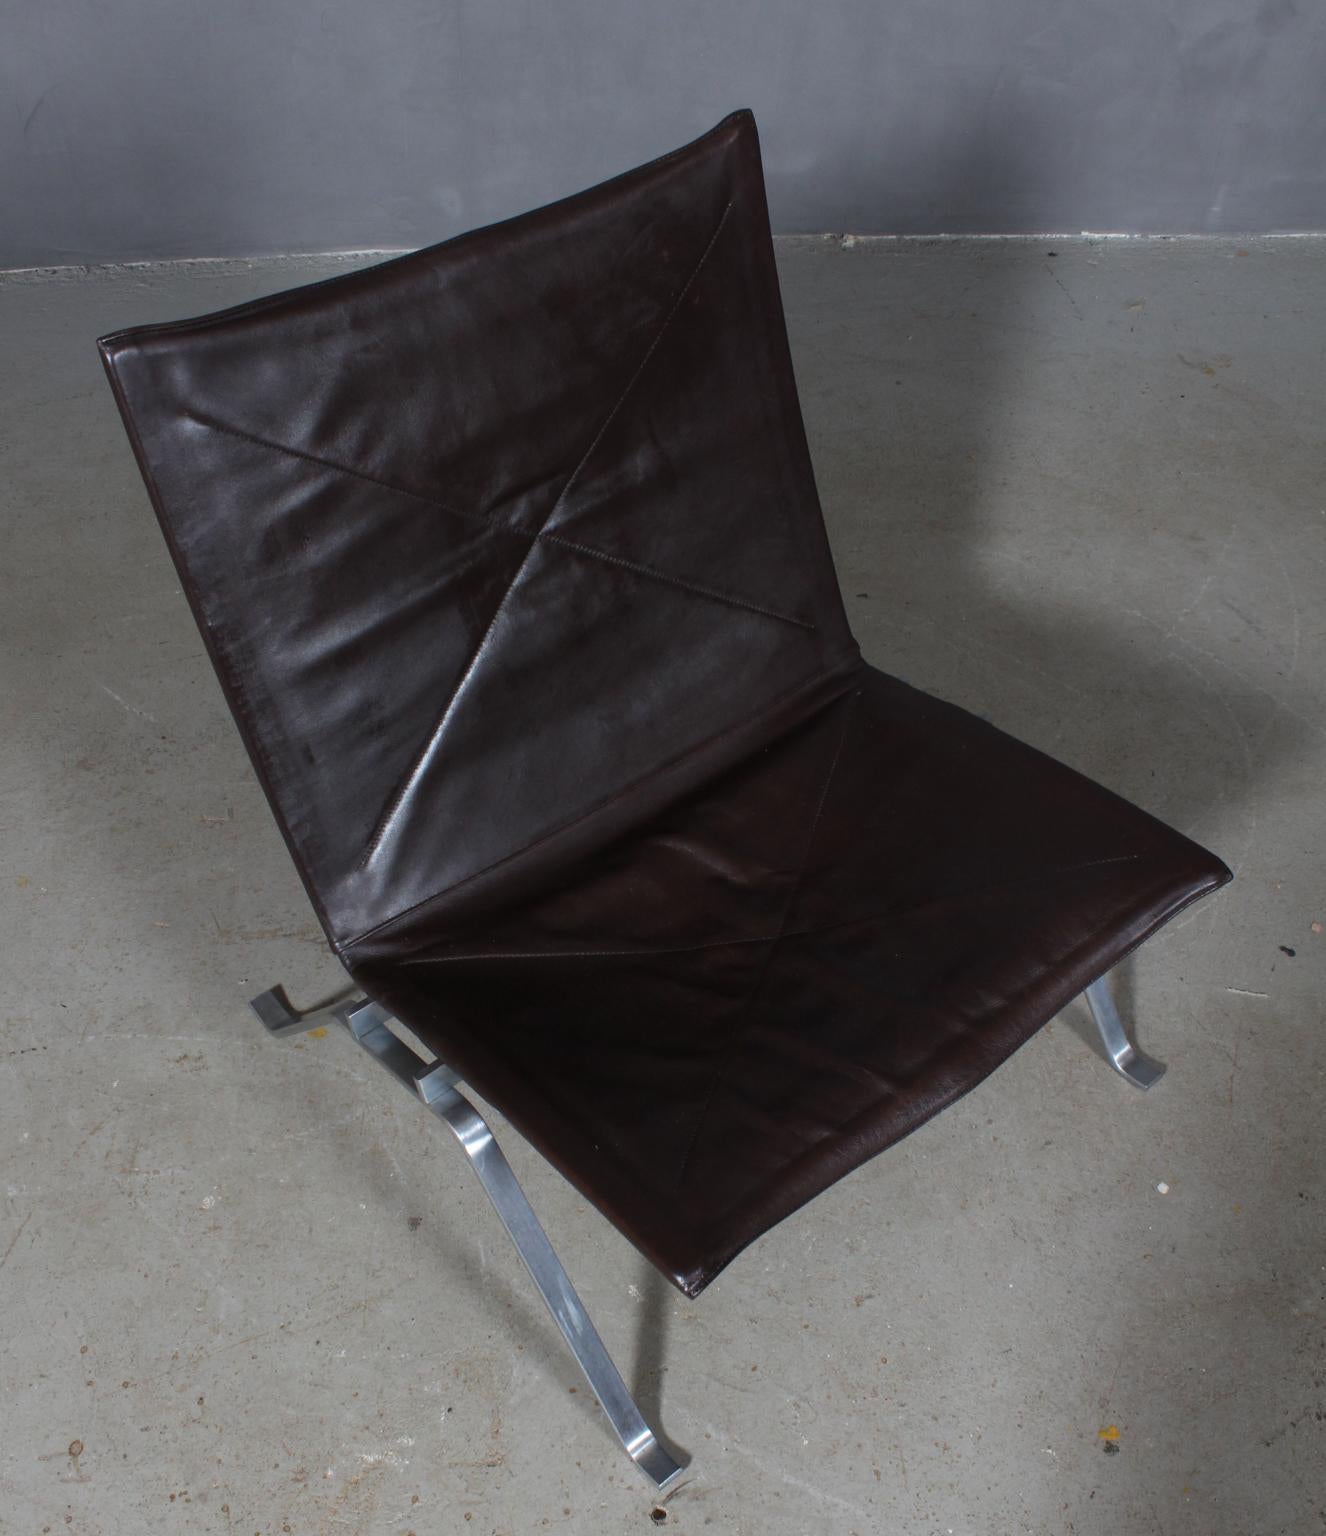 Poul Kjærholm lounge chair in original brown leather.

Frame of brushed steel.

Model PK22, made by Kold Christensen.